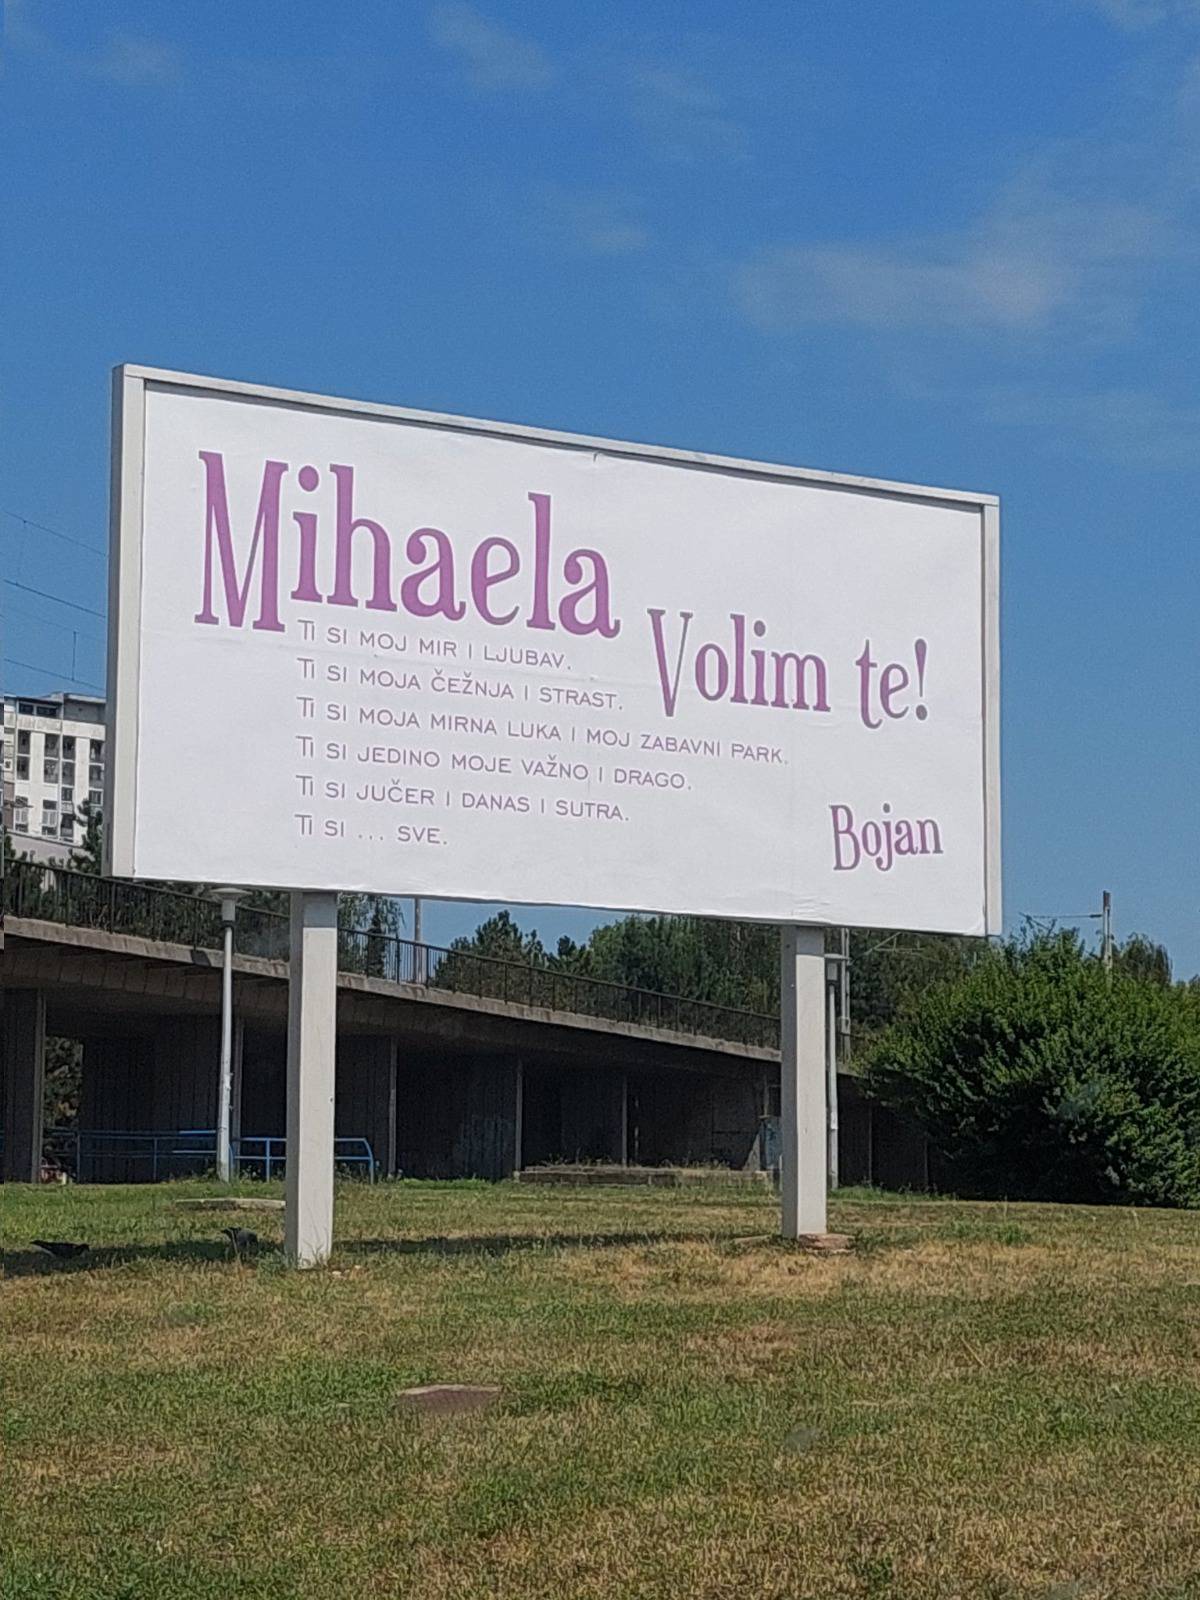 U Zagrebu osvanuo misteriozni ljubavni plakat: Mihaela, ti si moj mir i ljubav...ti si sve...